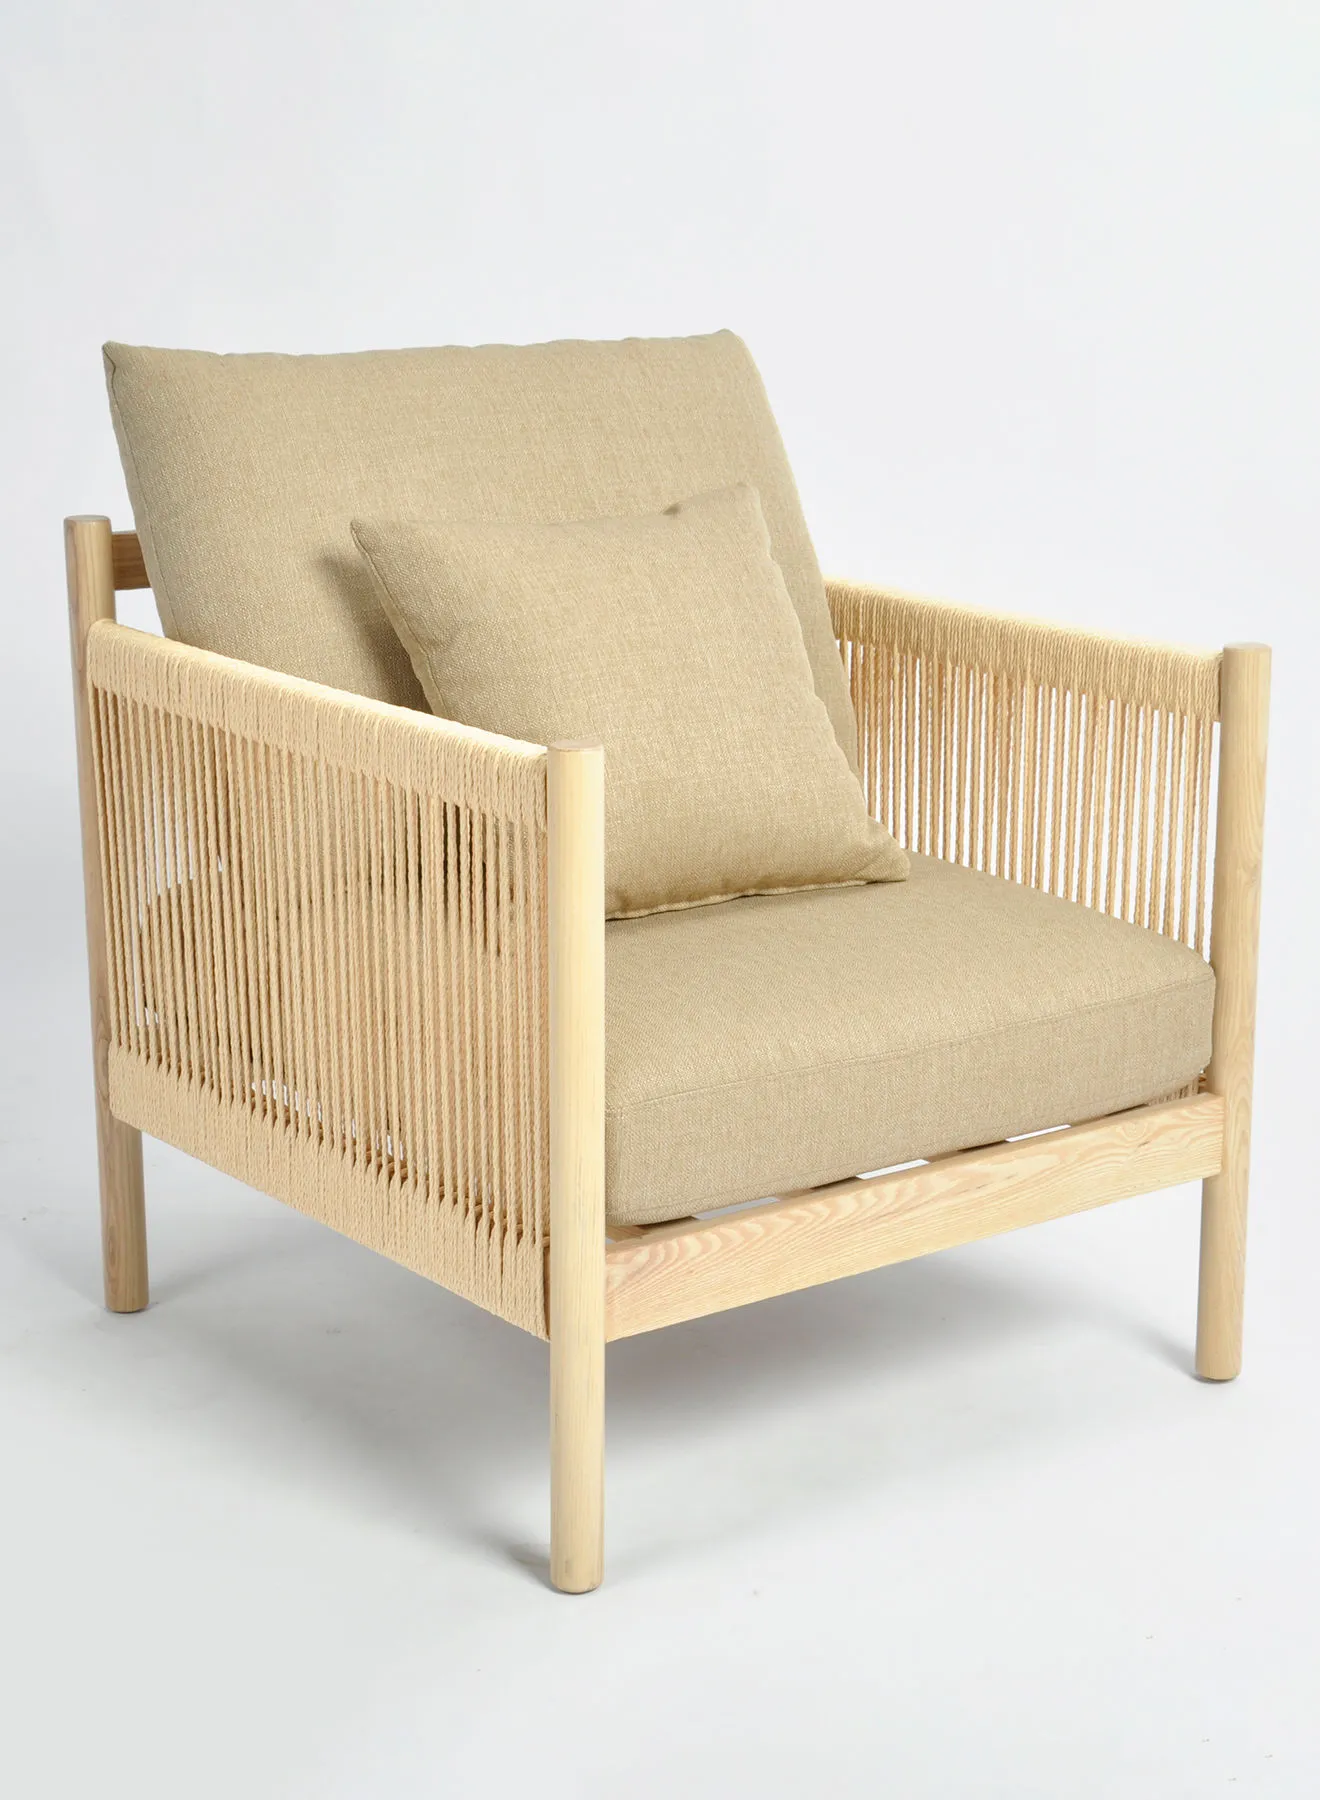 Switch Armchair In Beige Wooden Chair Size 73 X 79 X 83